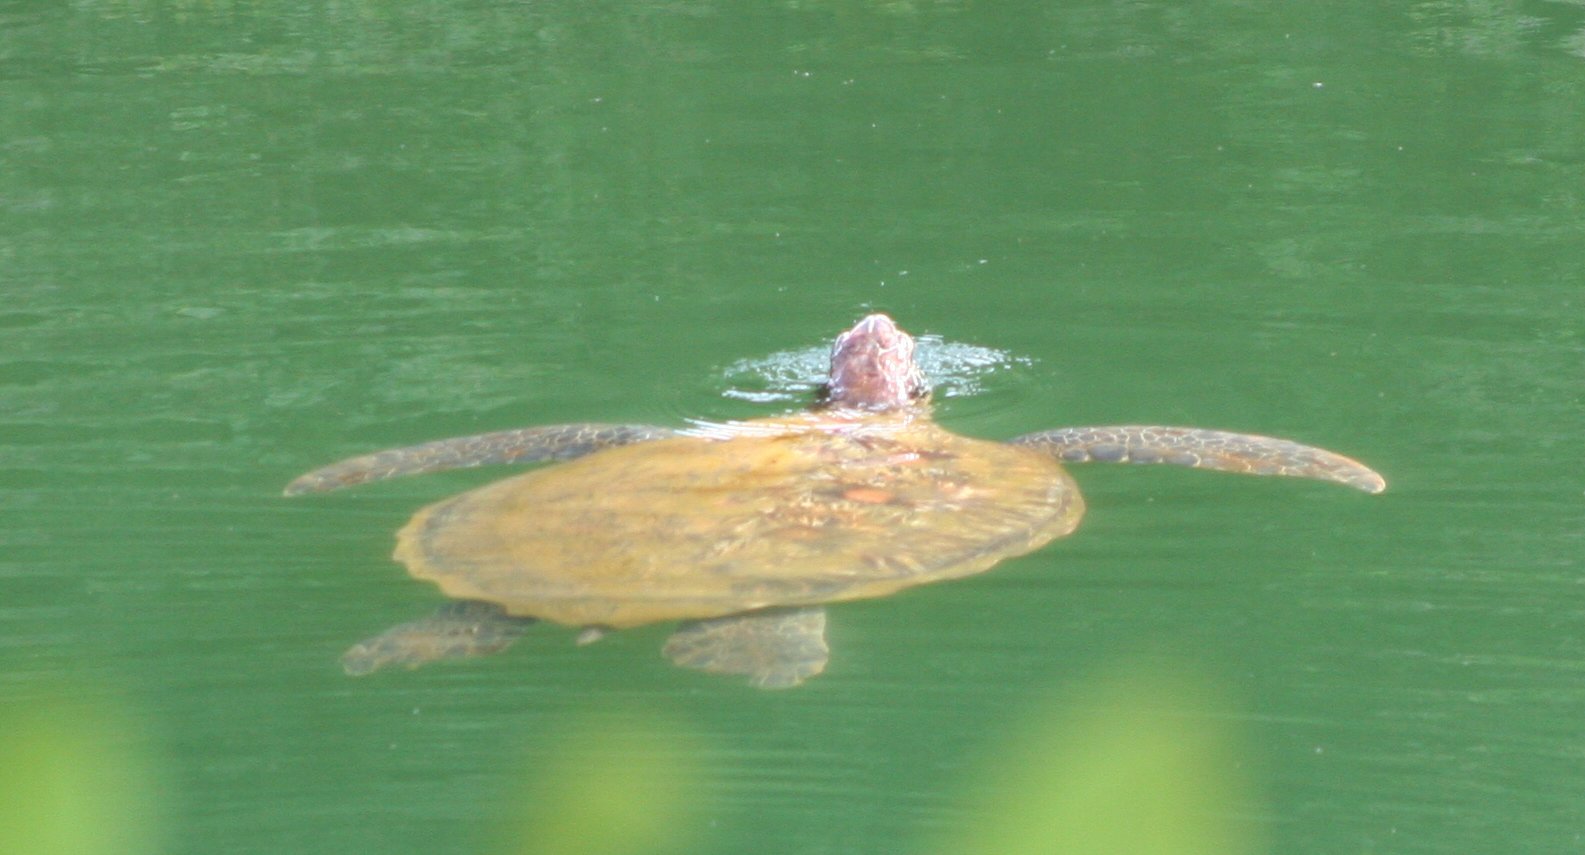 turtle4 (170k image)